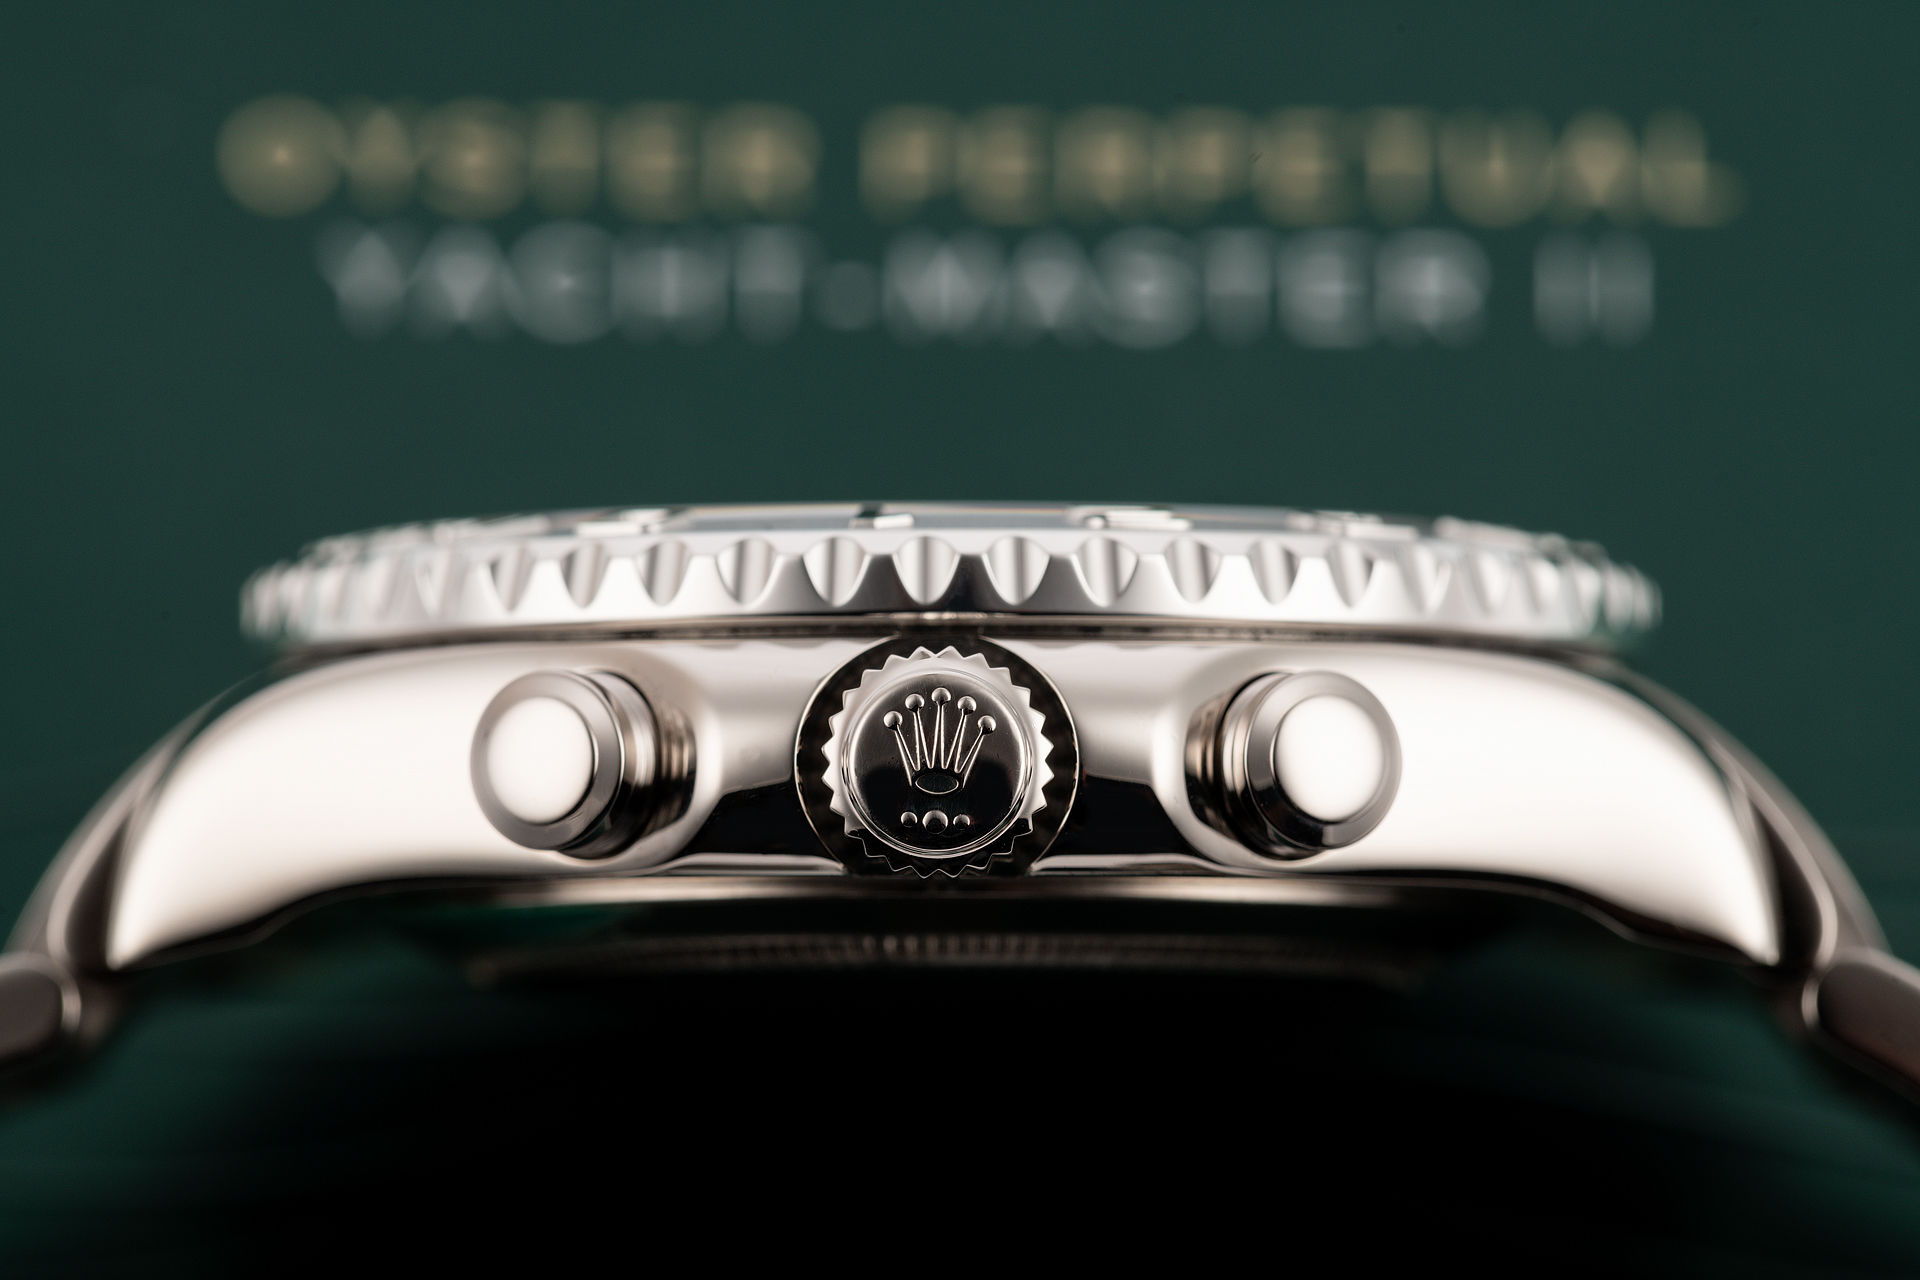 ref 116689 | Platinum Bezel 'Countdown Chronograph' | Rolex Yacht-Master II